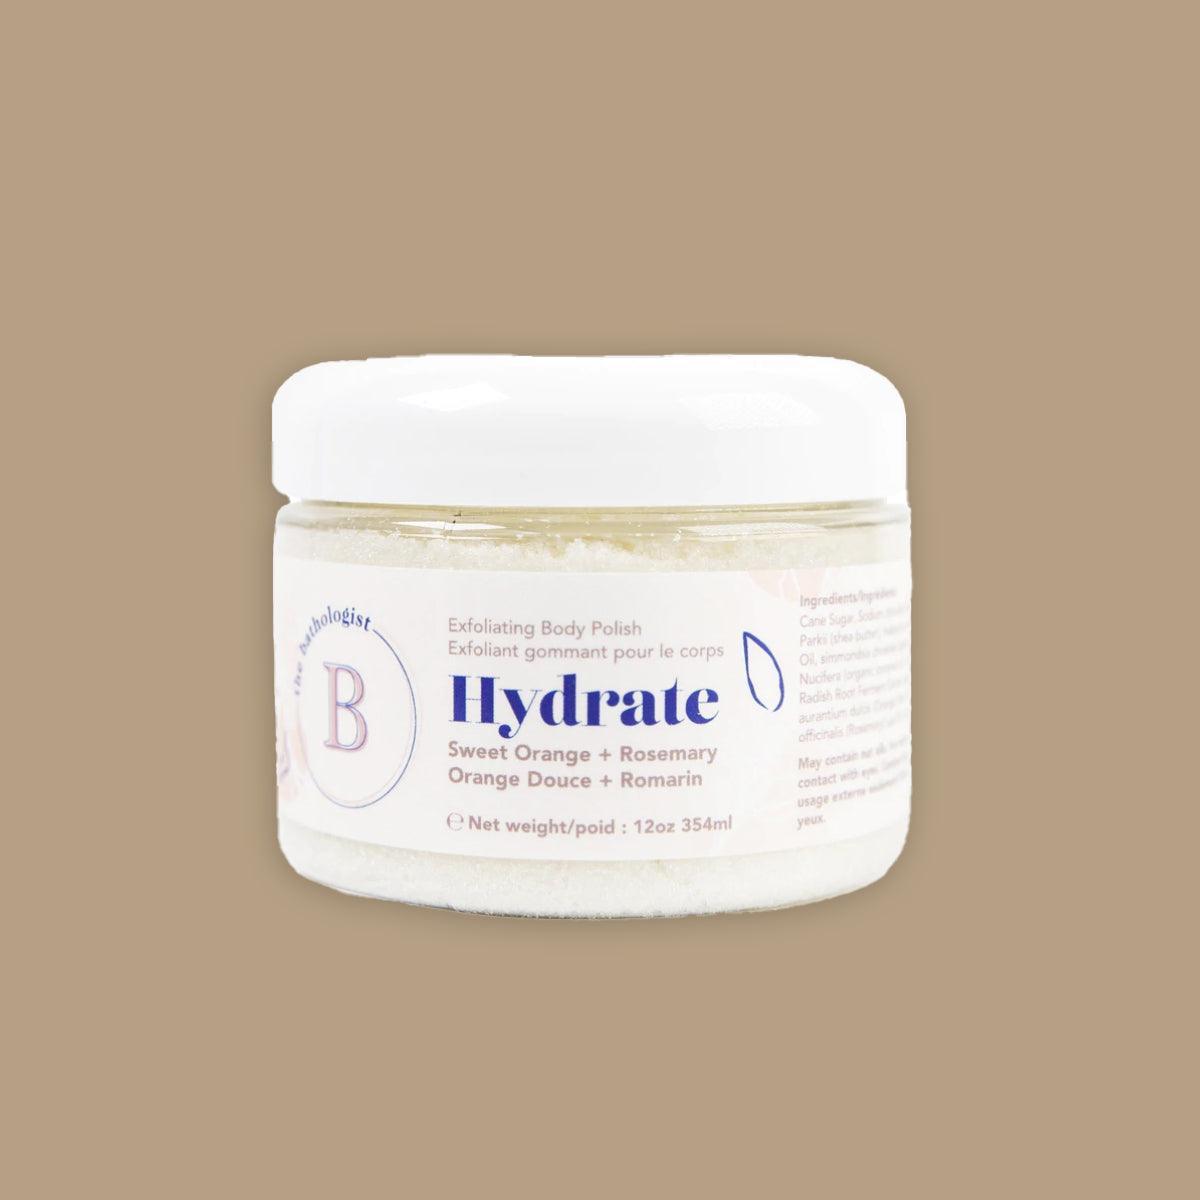 hydrate body polish - local - letsbelocal.ca